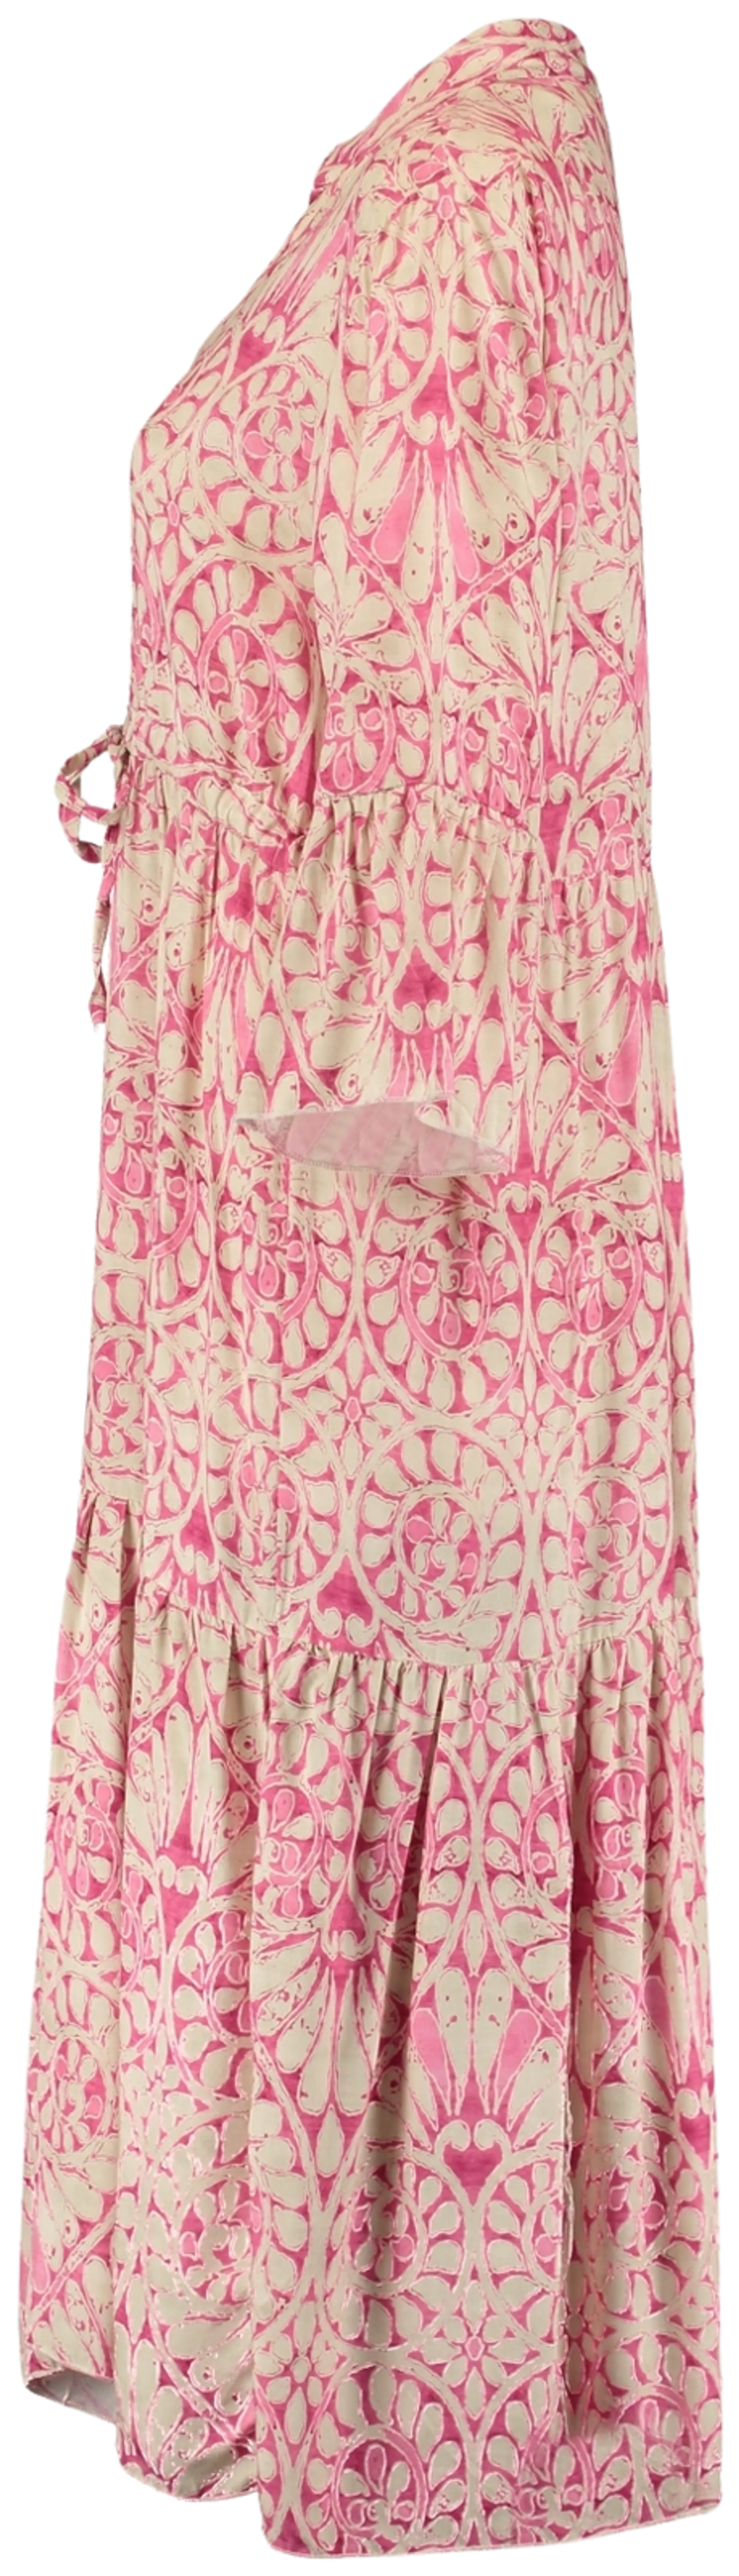 Hailys naisten mekko Casia MIK-67255 - 7178 pink div - 2